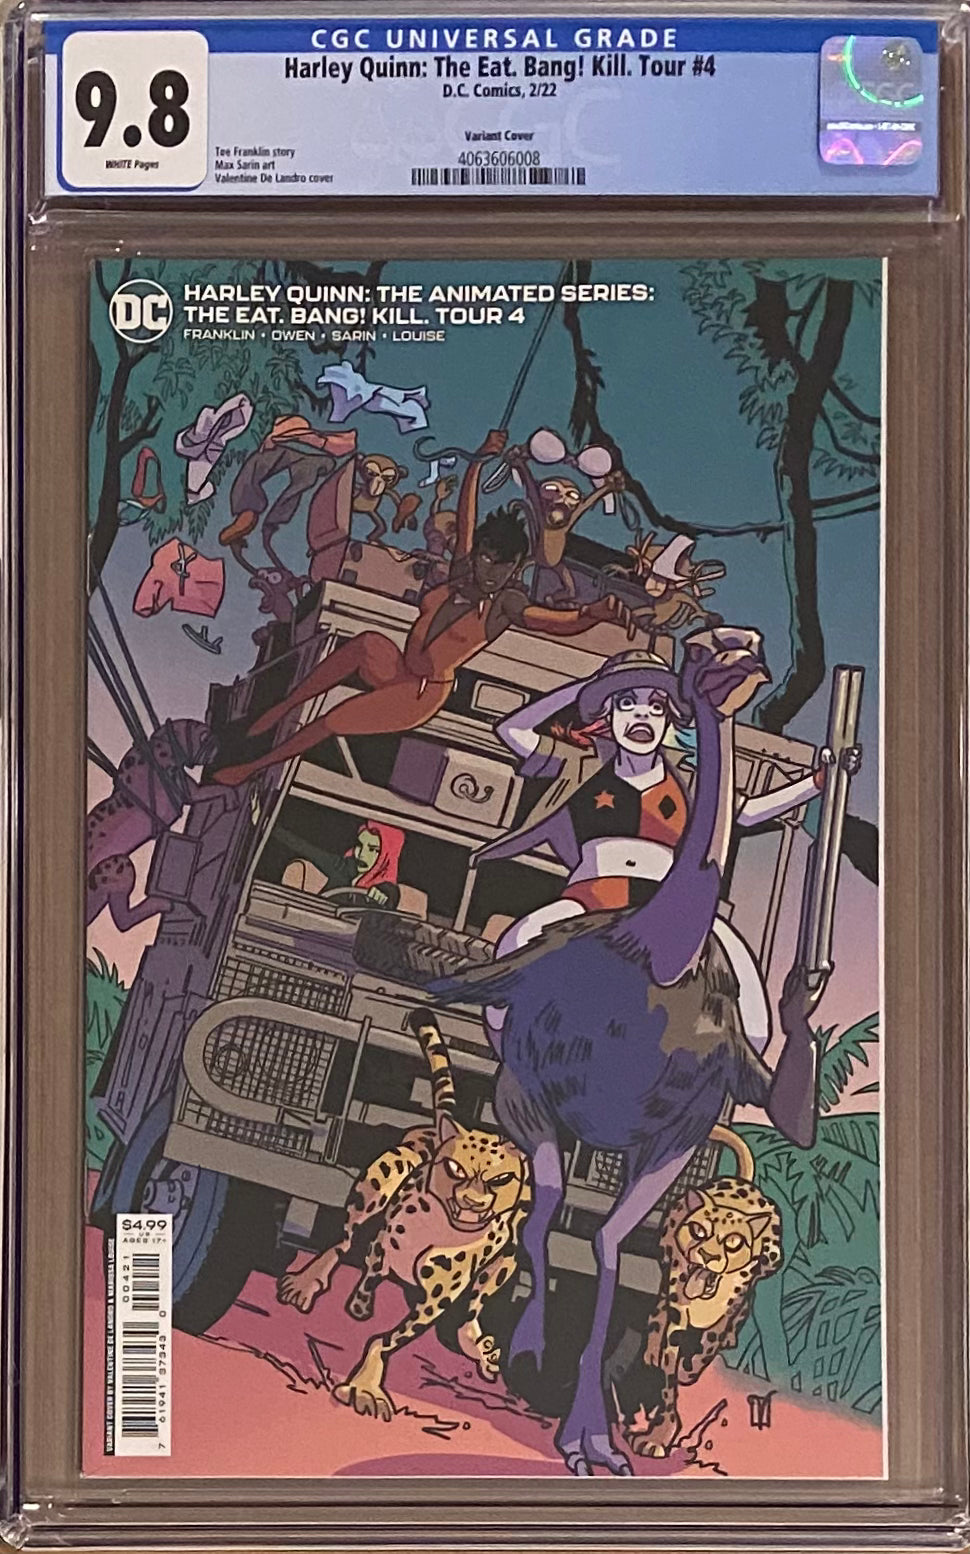 Harley Quinn: The Animated Series - The Eat, Bang! Kill Tour #4 Variant CGC 9.8